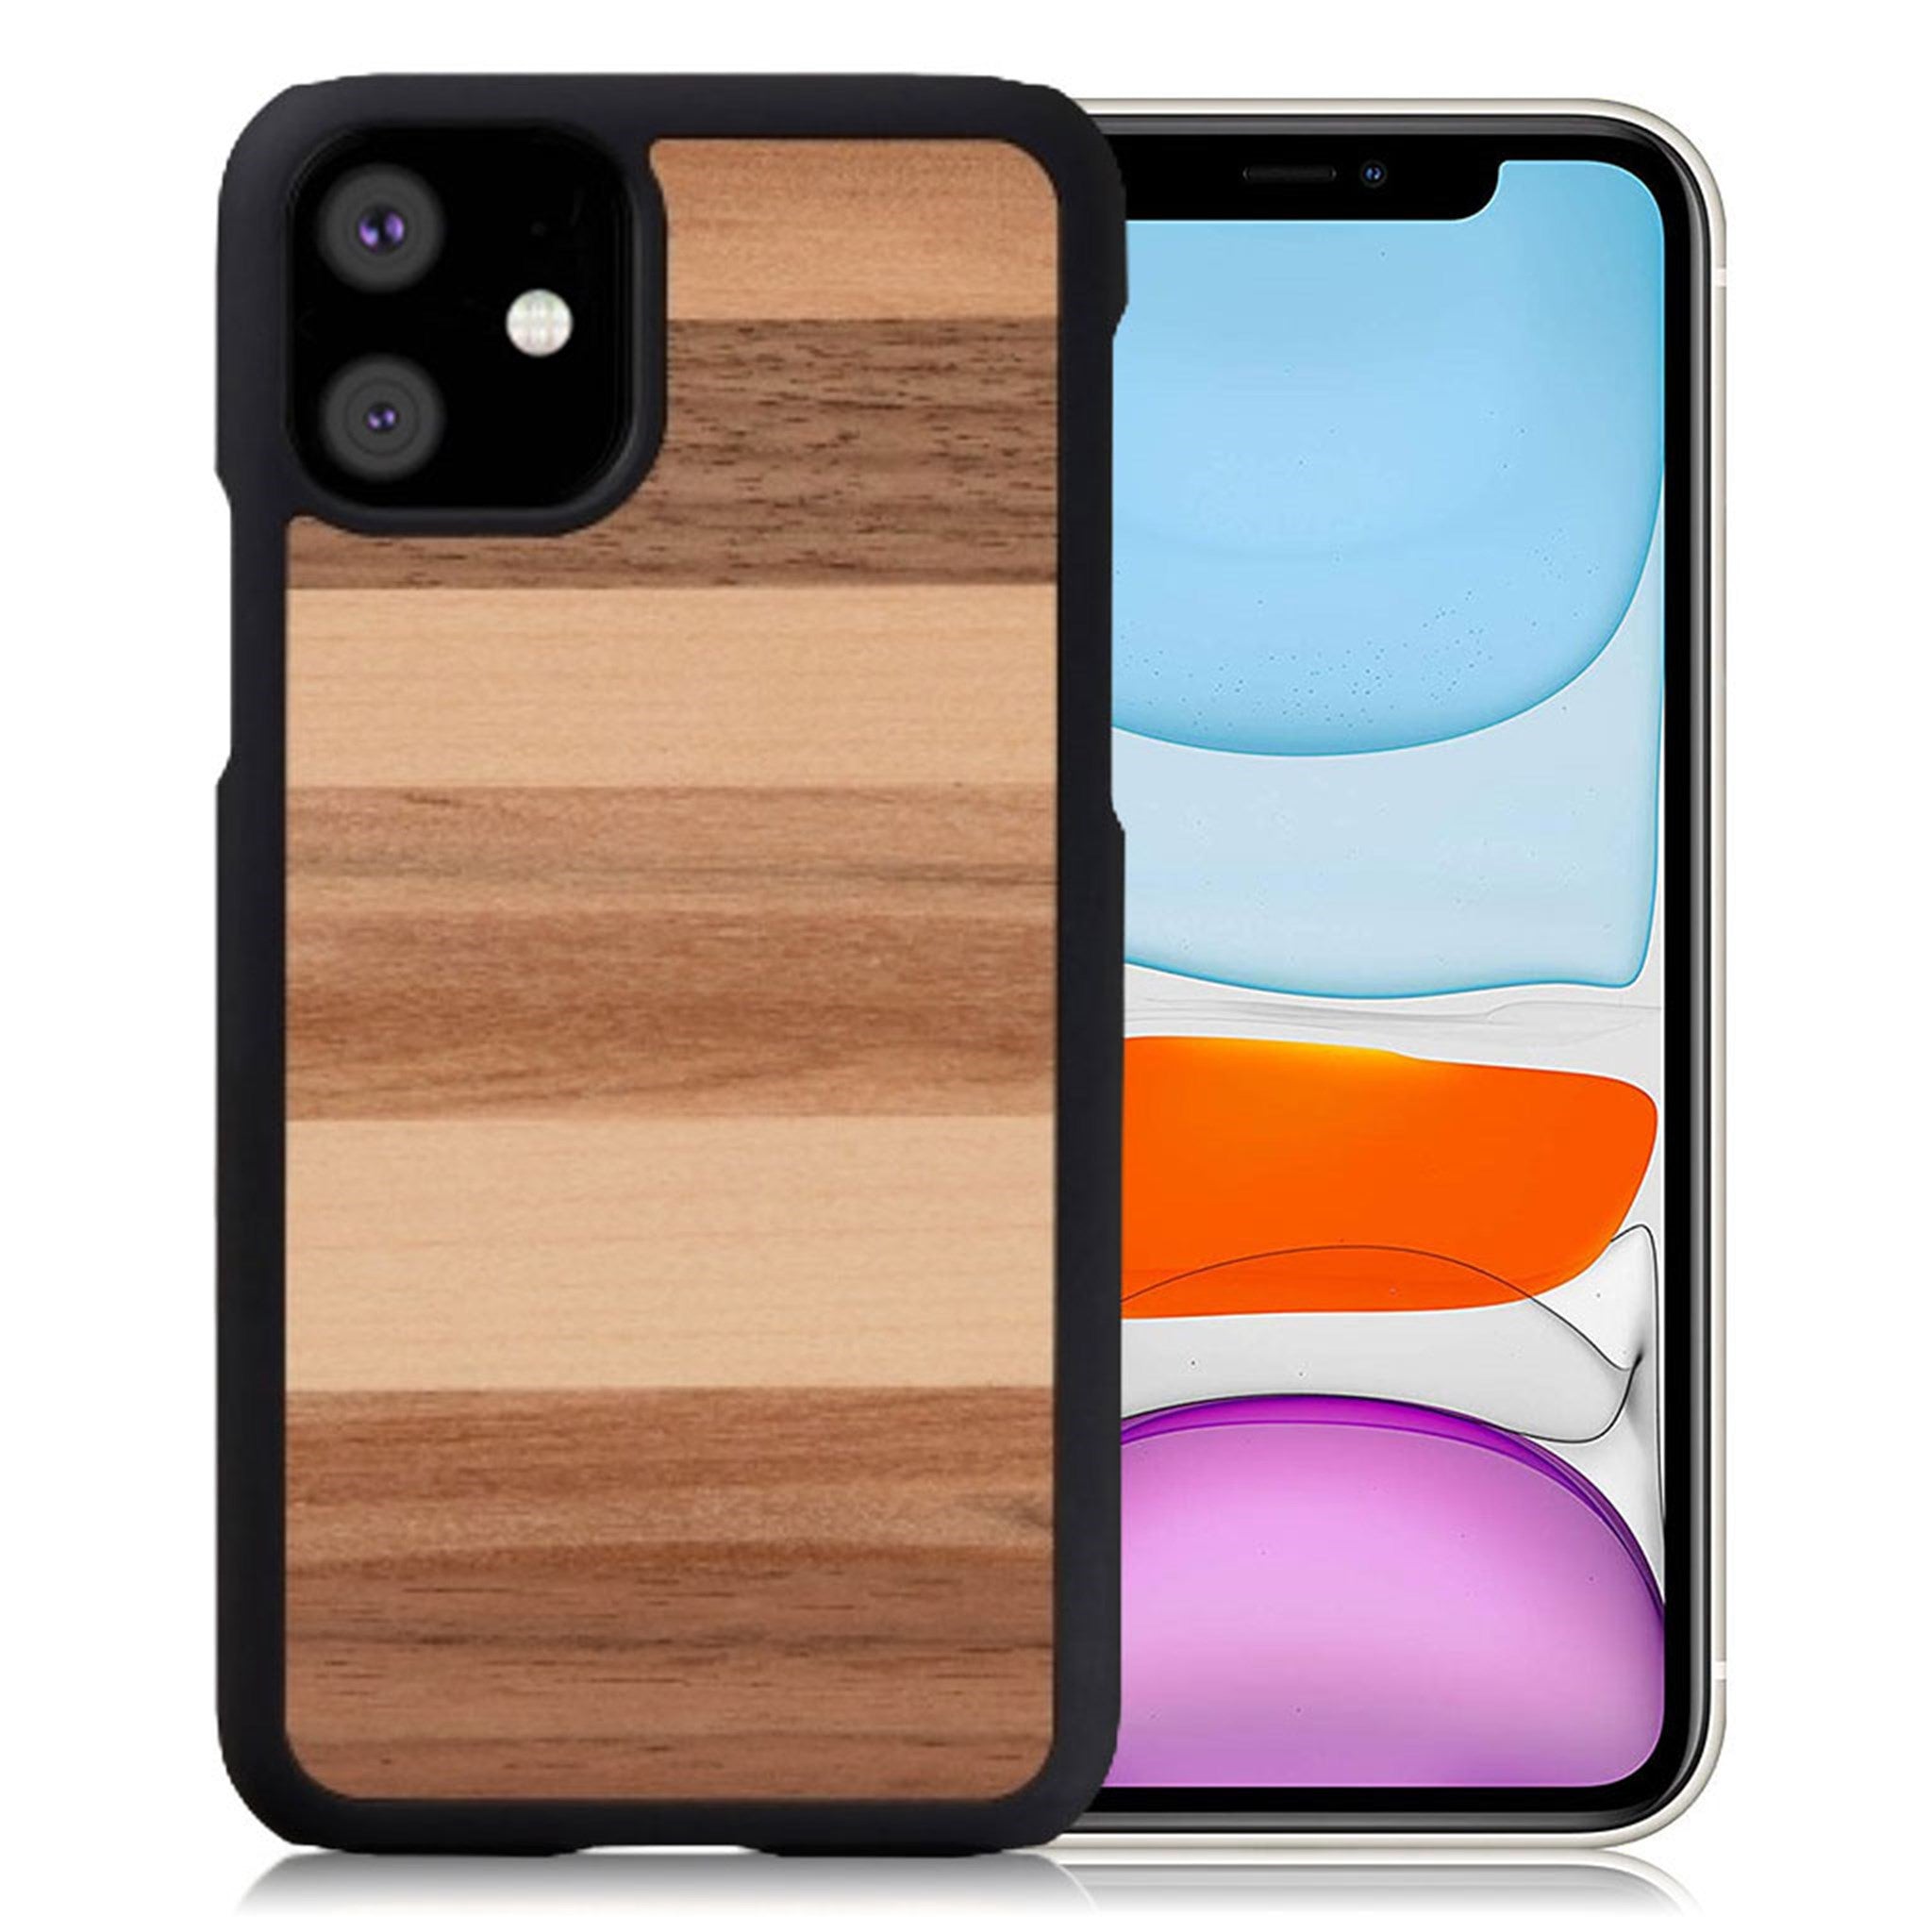 Man&Wood premium case for iPhone 11 - Sabbia